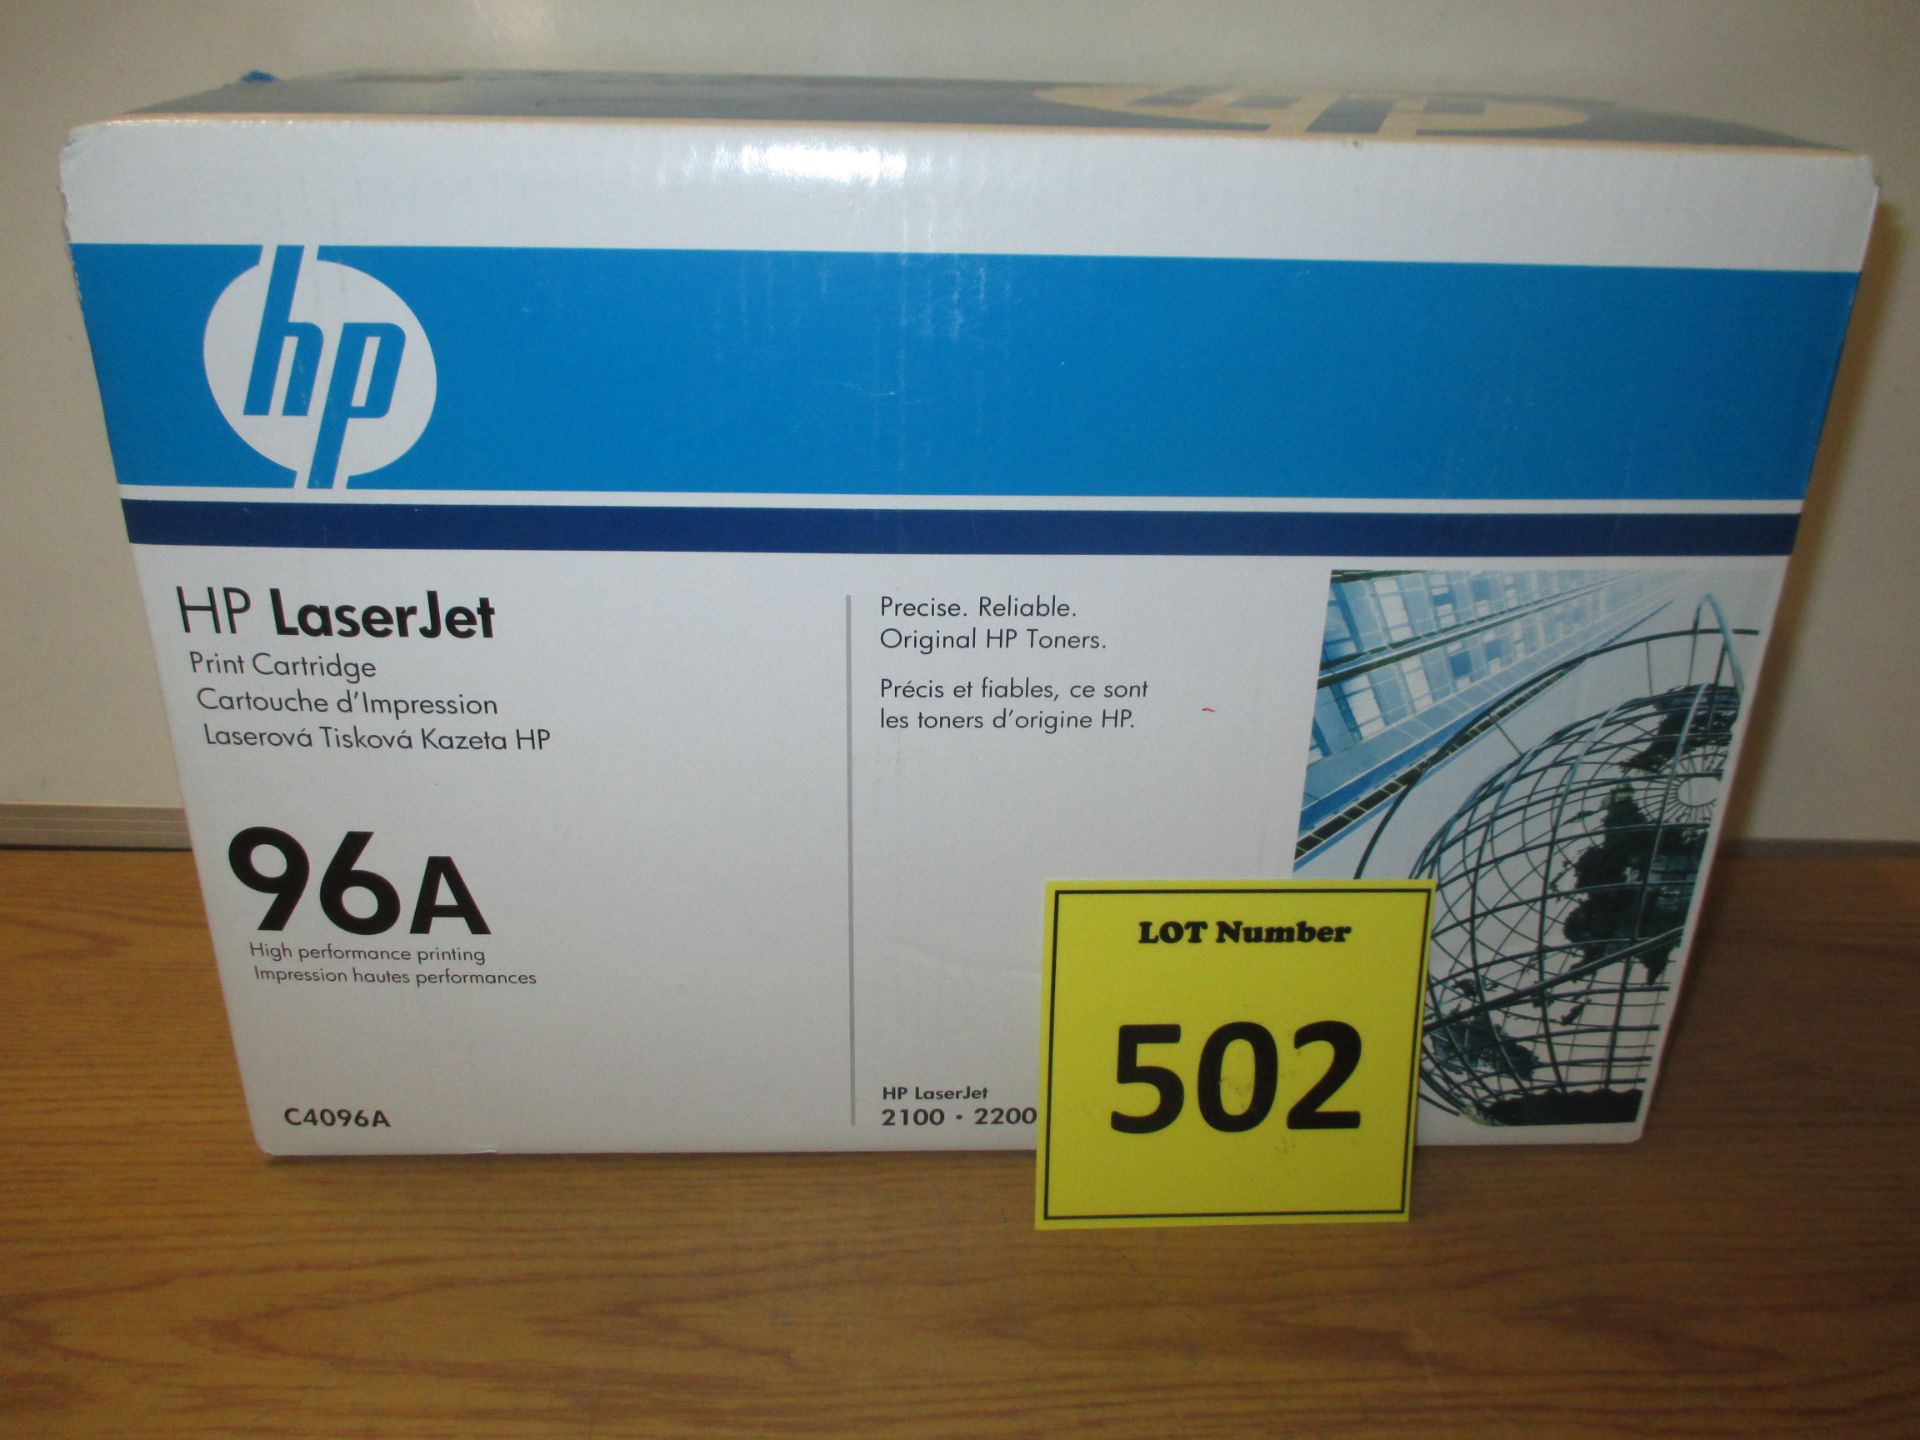 HP GENUINE ORIGINAL BLACK TONER CARTRIDGE 96A (C4096A) FOR HP LASERJET 2100/2200